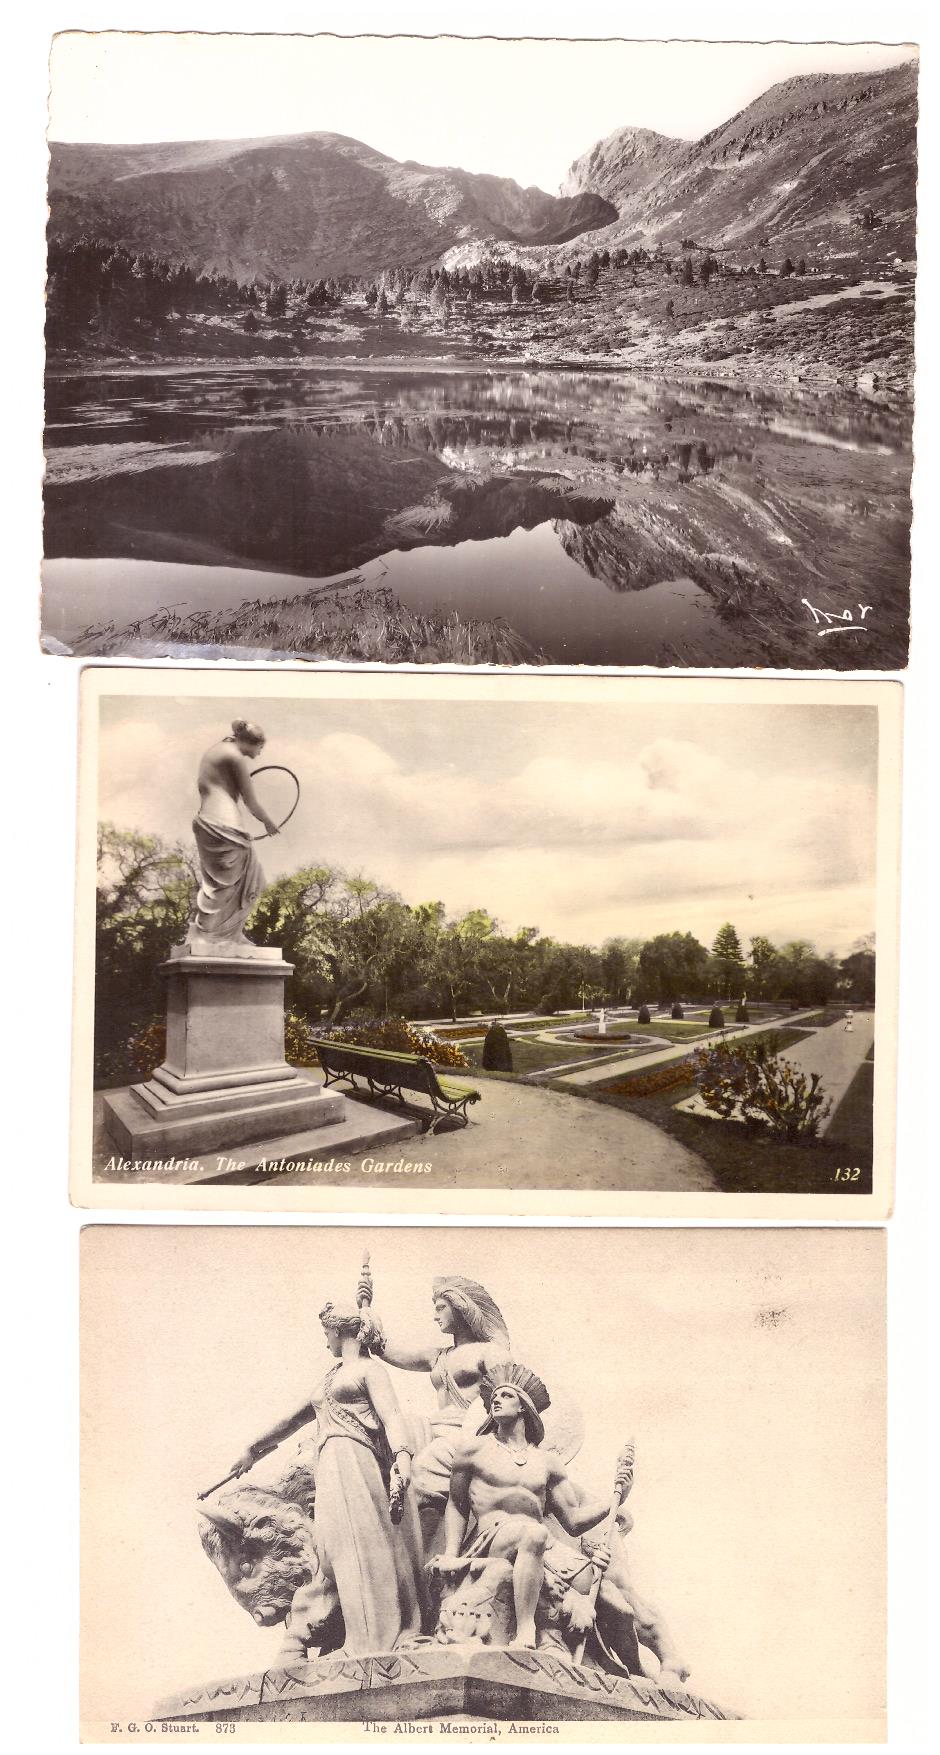 Lote de 3 Postales: Le Canigou (Francia), Alexandria (Egipto) y The Alber Memorial, América